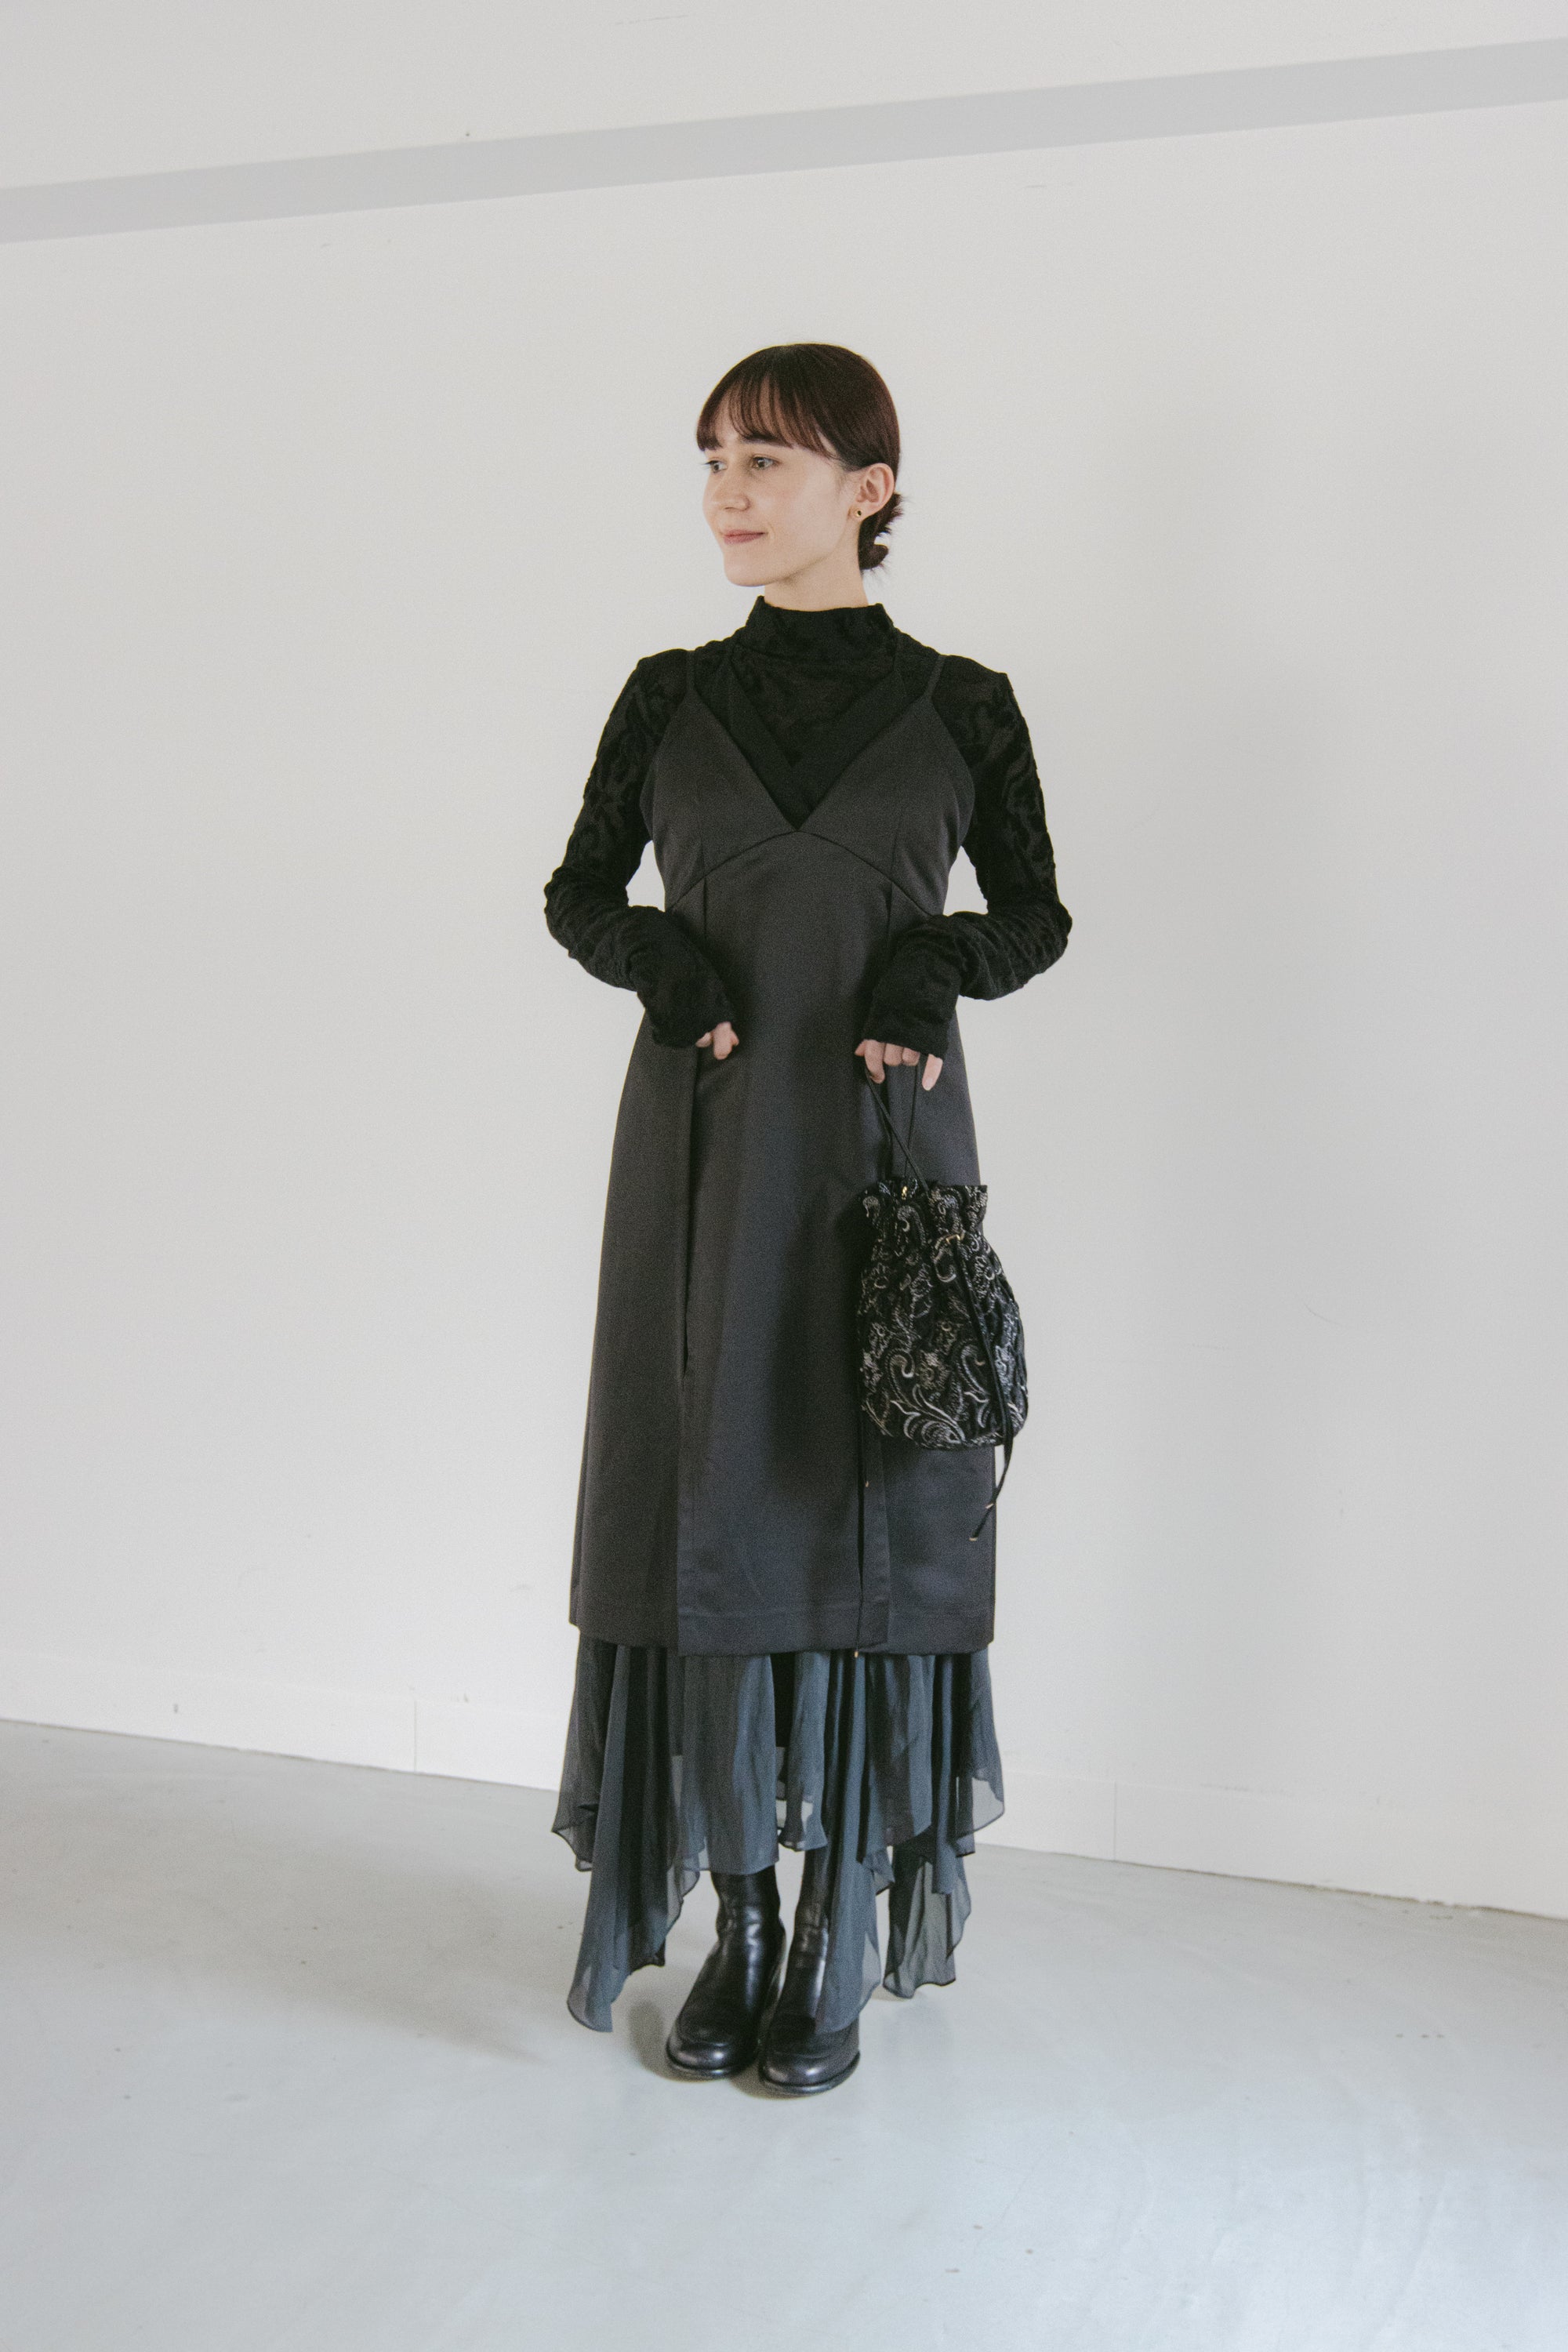 MURRAL Flutters camisole dress (Black)